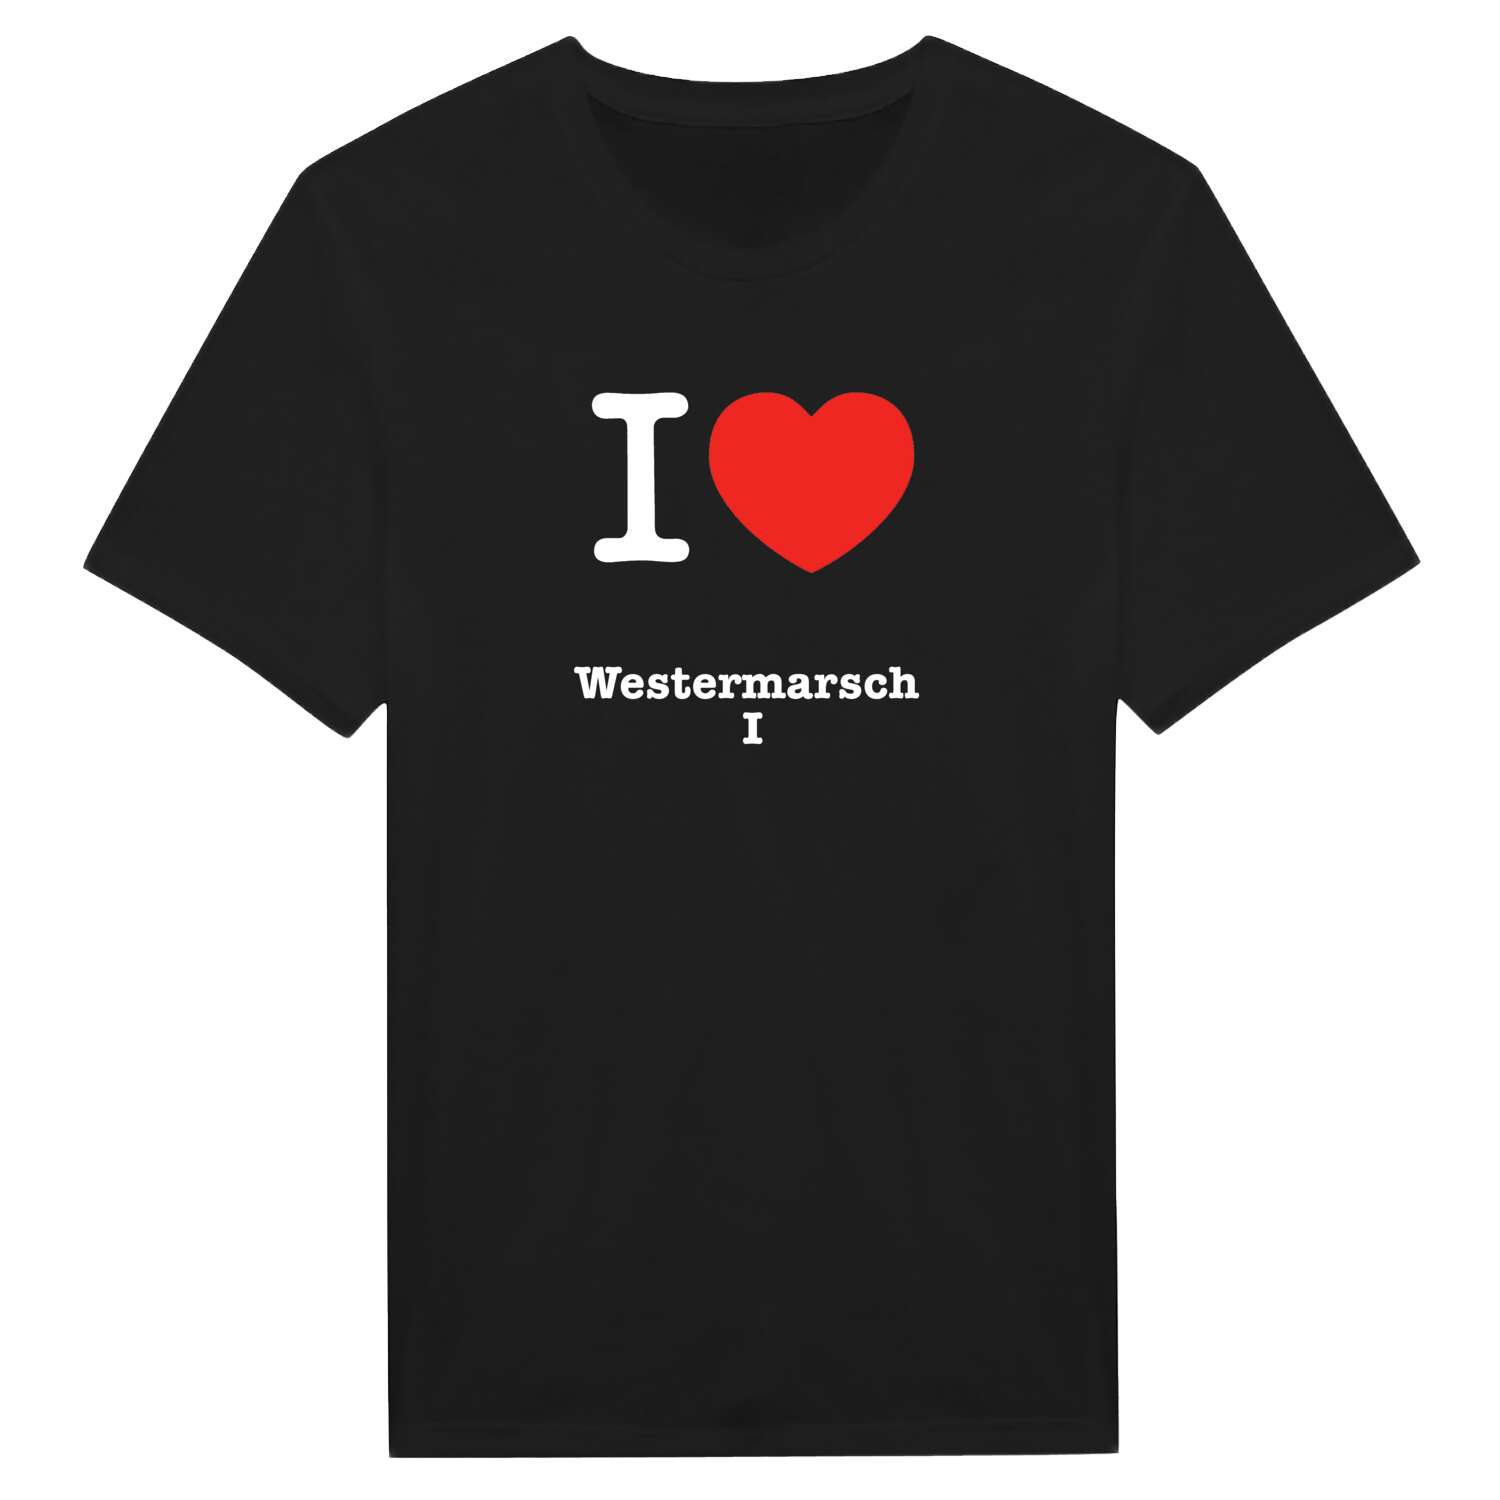 Westermarsch I T-Shirt »I love«